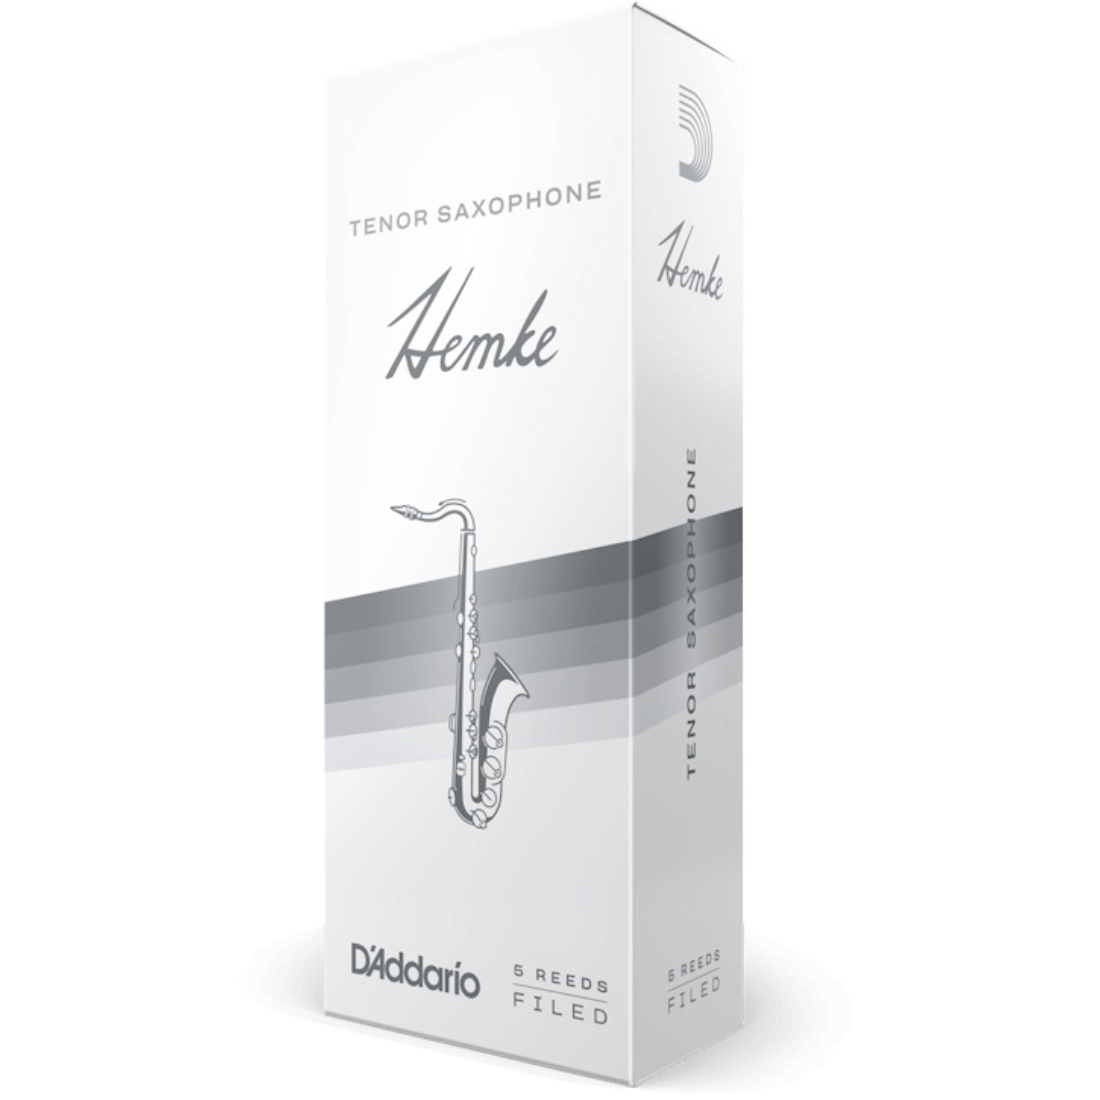 White and grey box of 5 Hemke tenor saxophone reeds - strength of 3